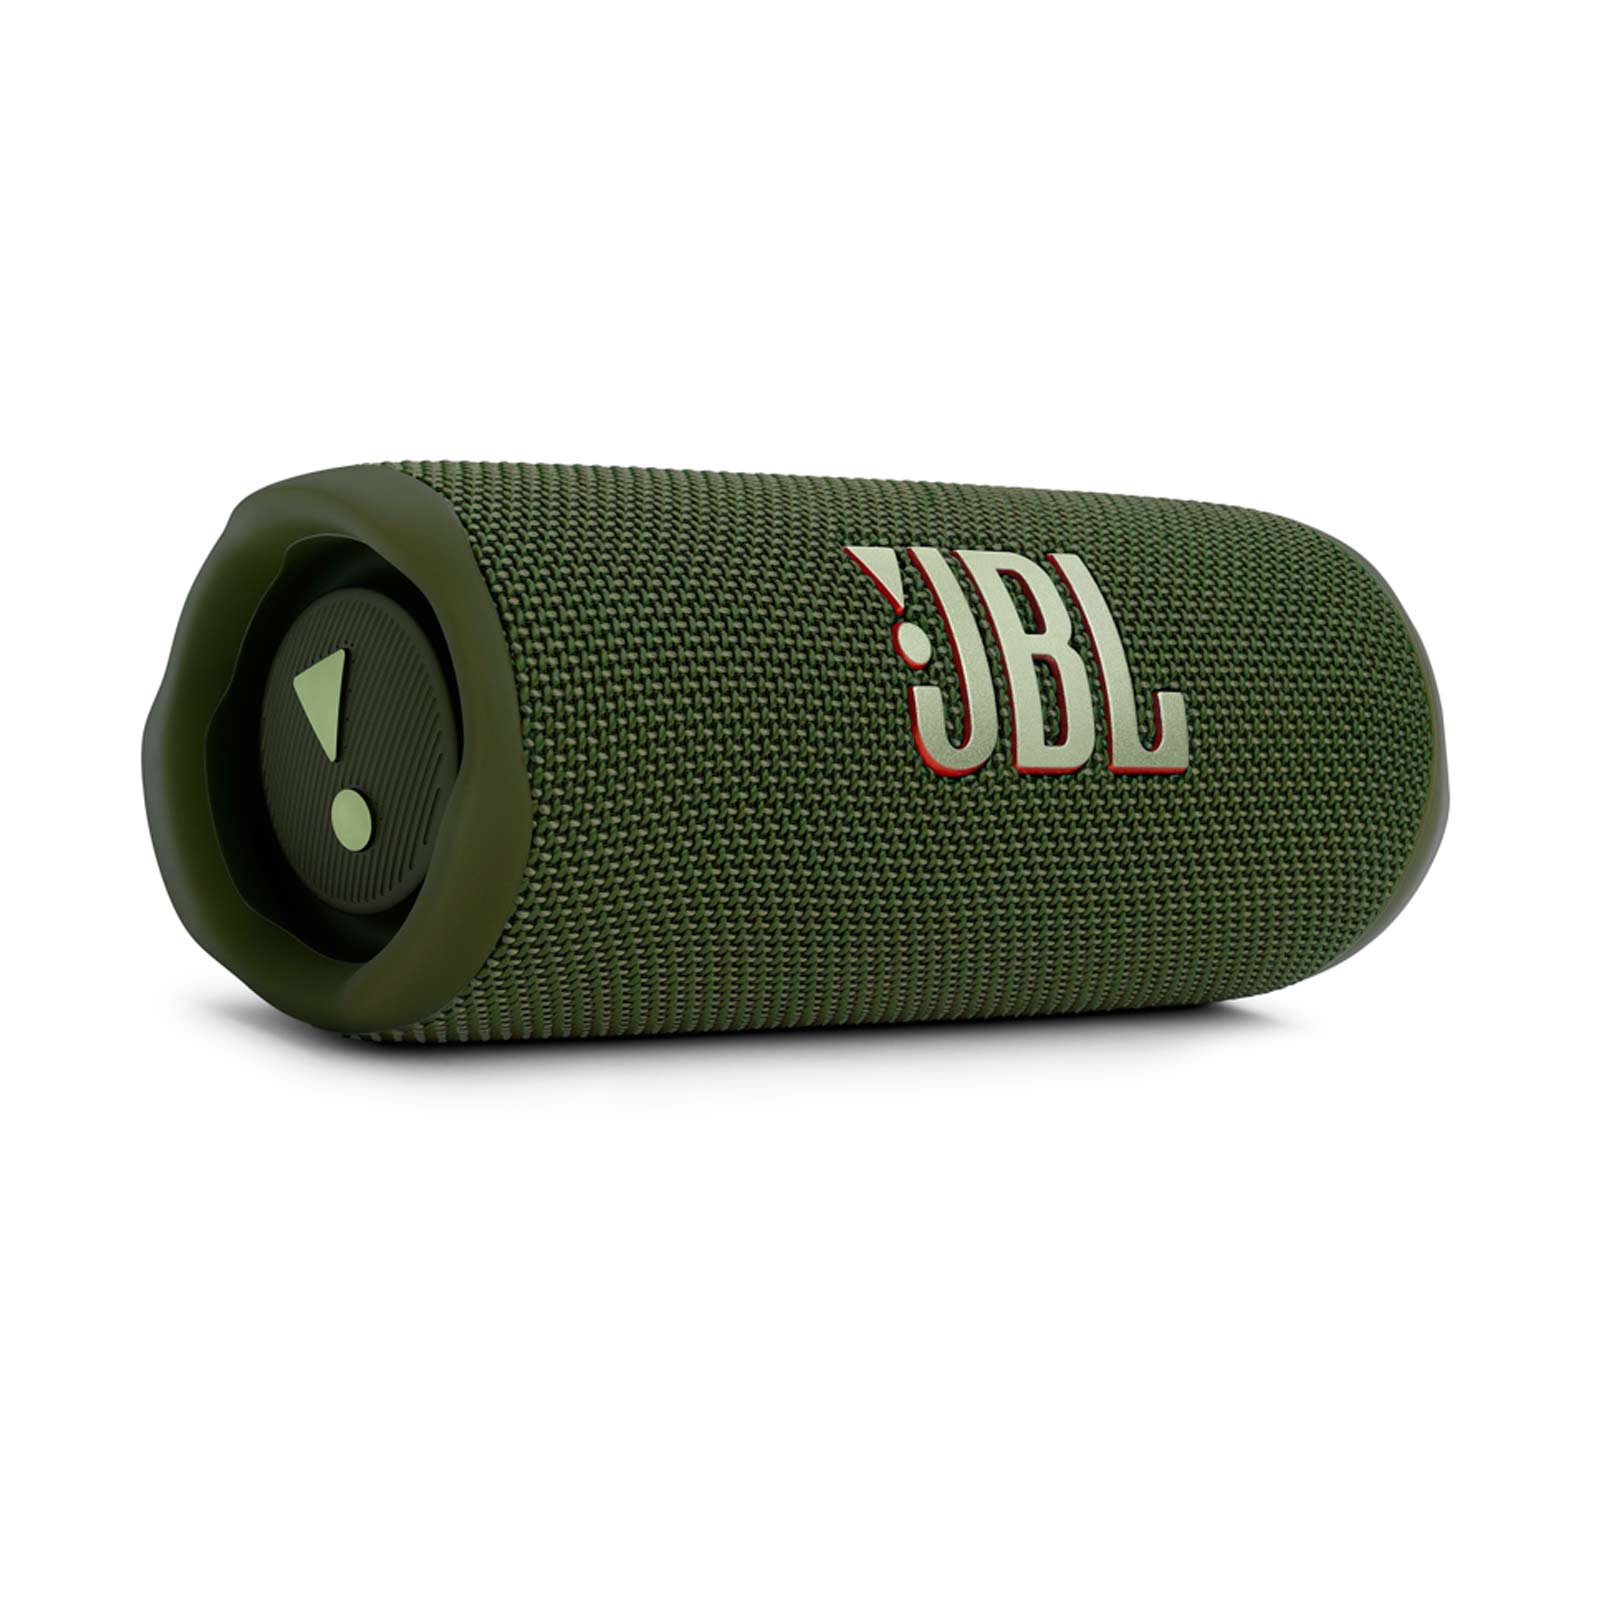 Parlante Bluetooth JBL Flip 6 Gris